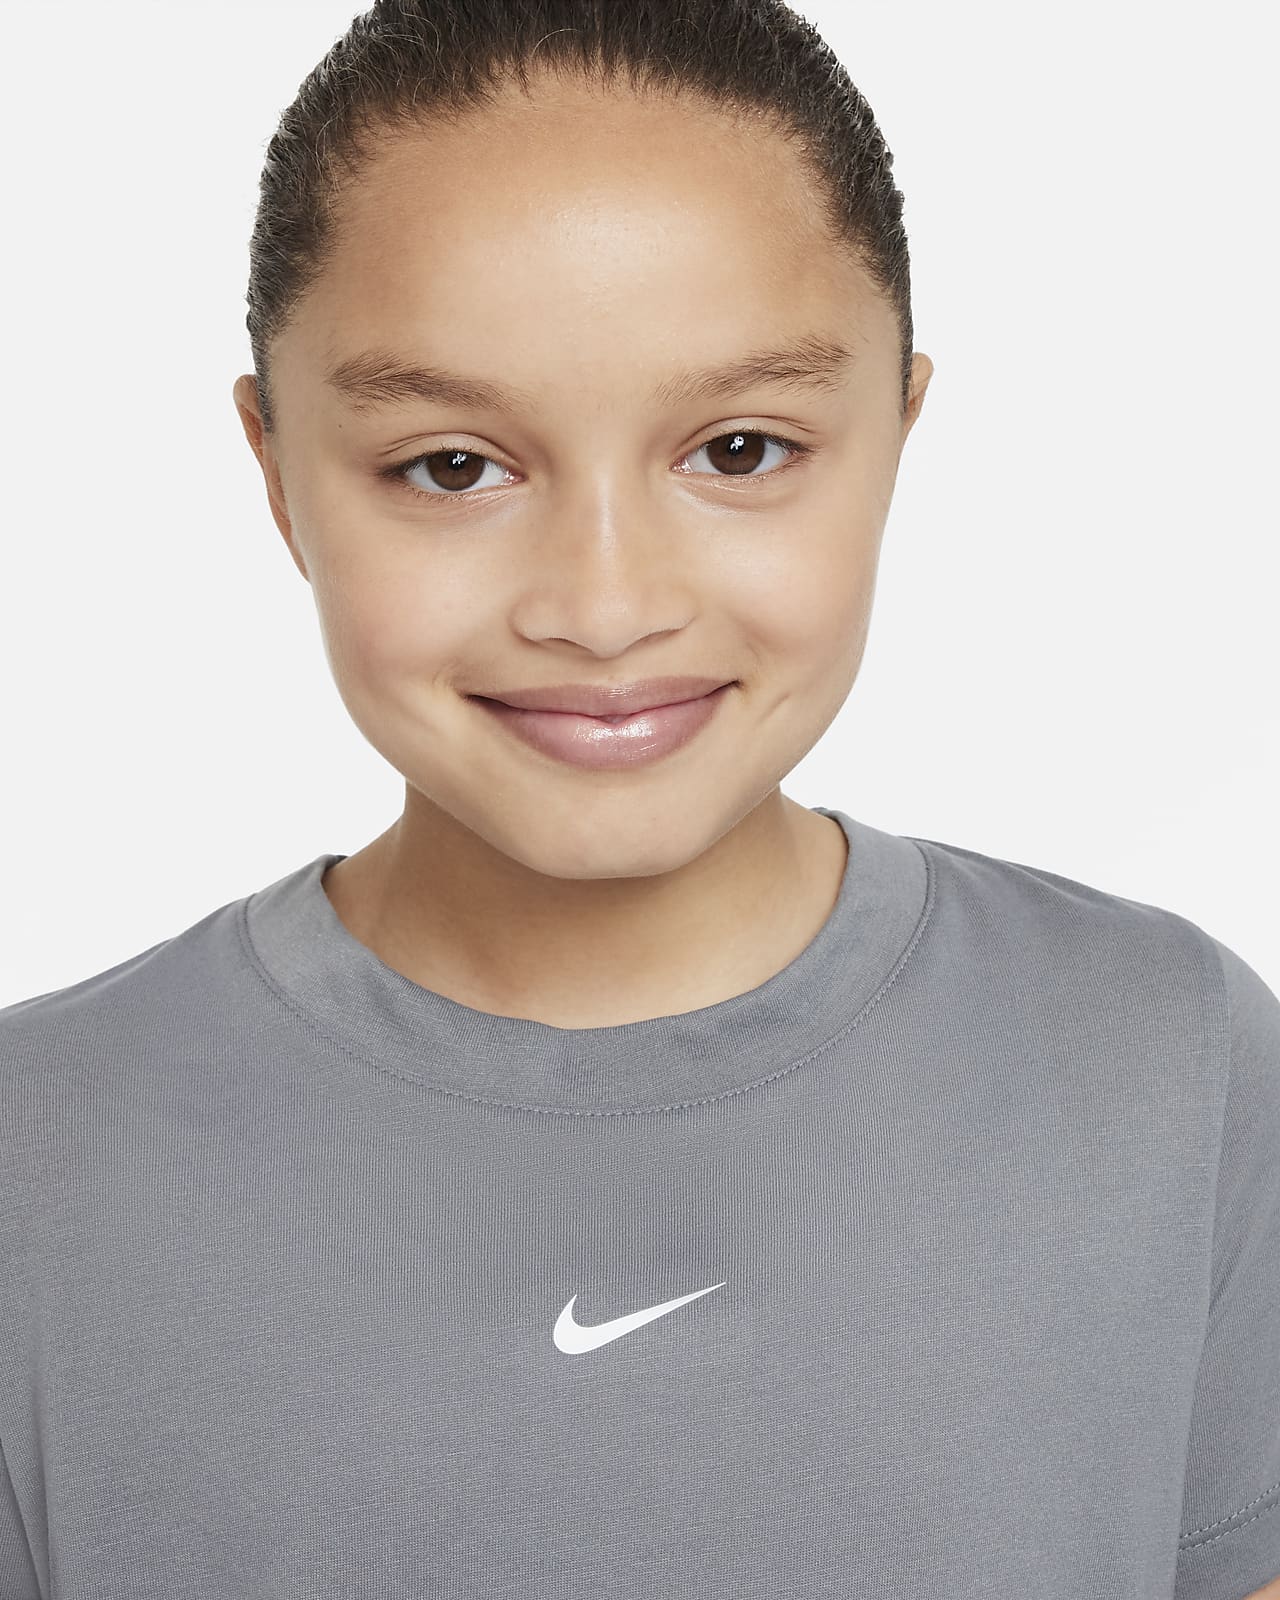 Nike Dri-FIT Breathe Big Kids' (Girls') Training Top.